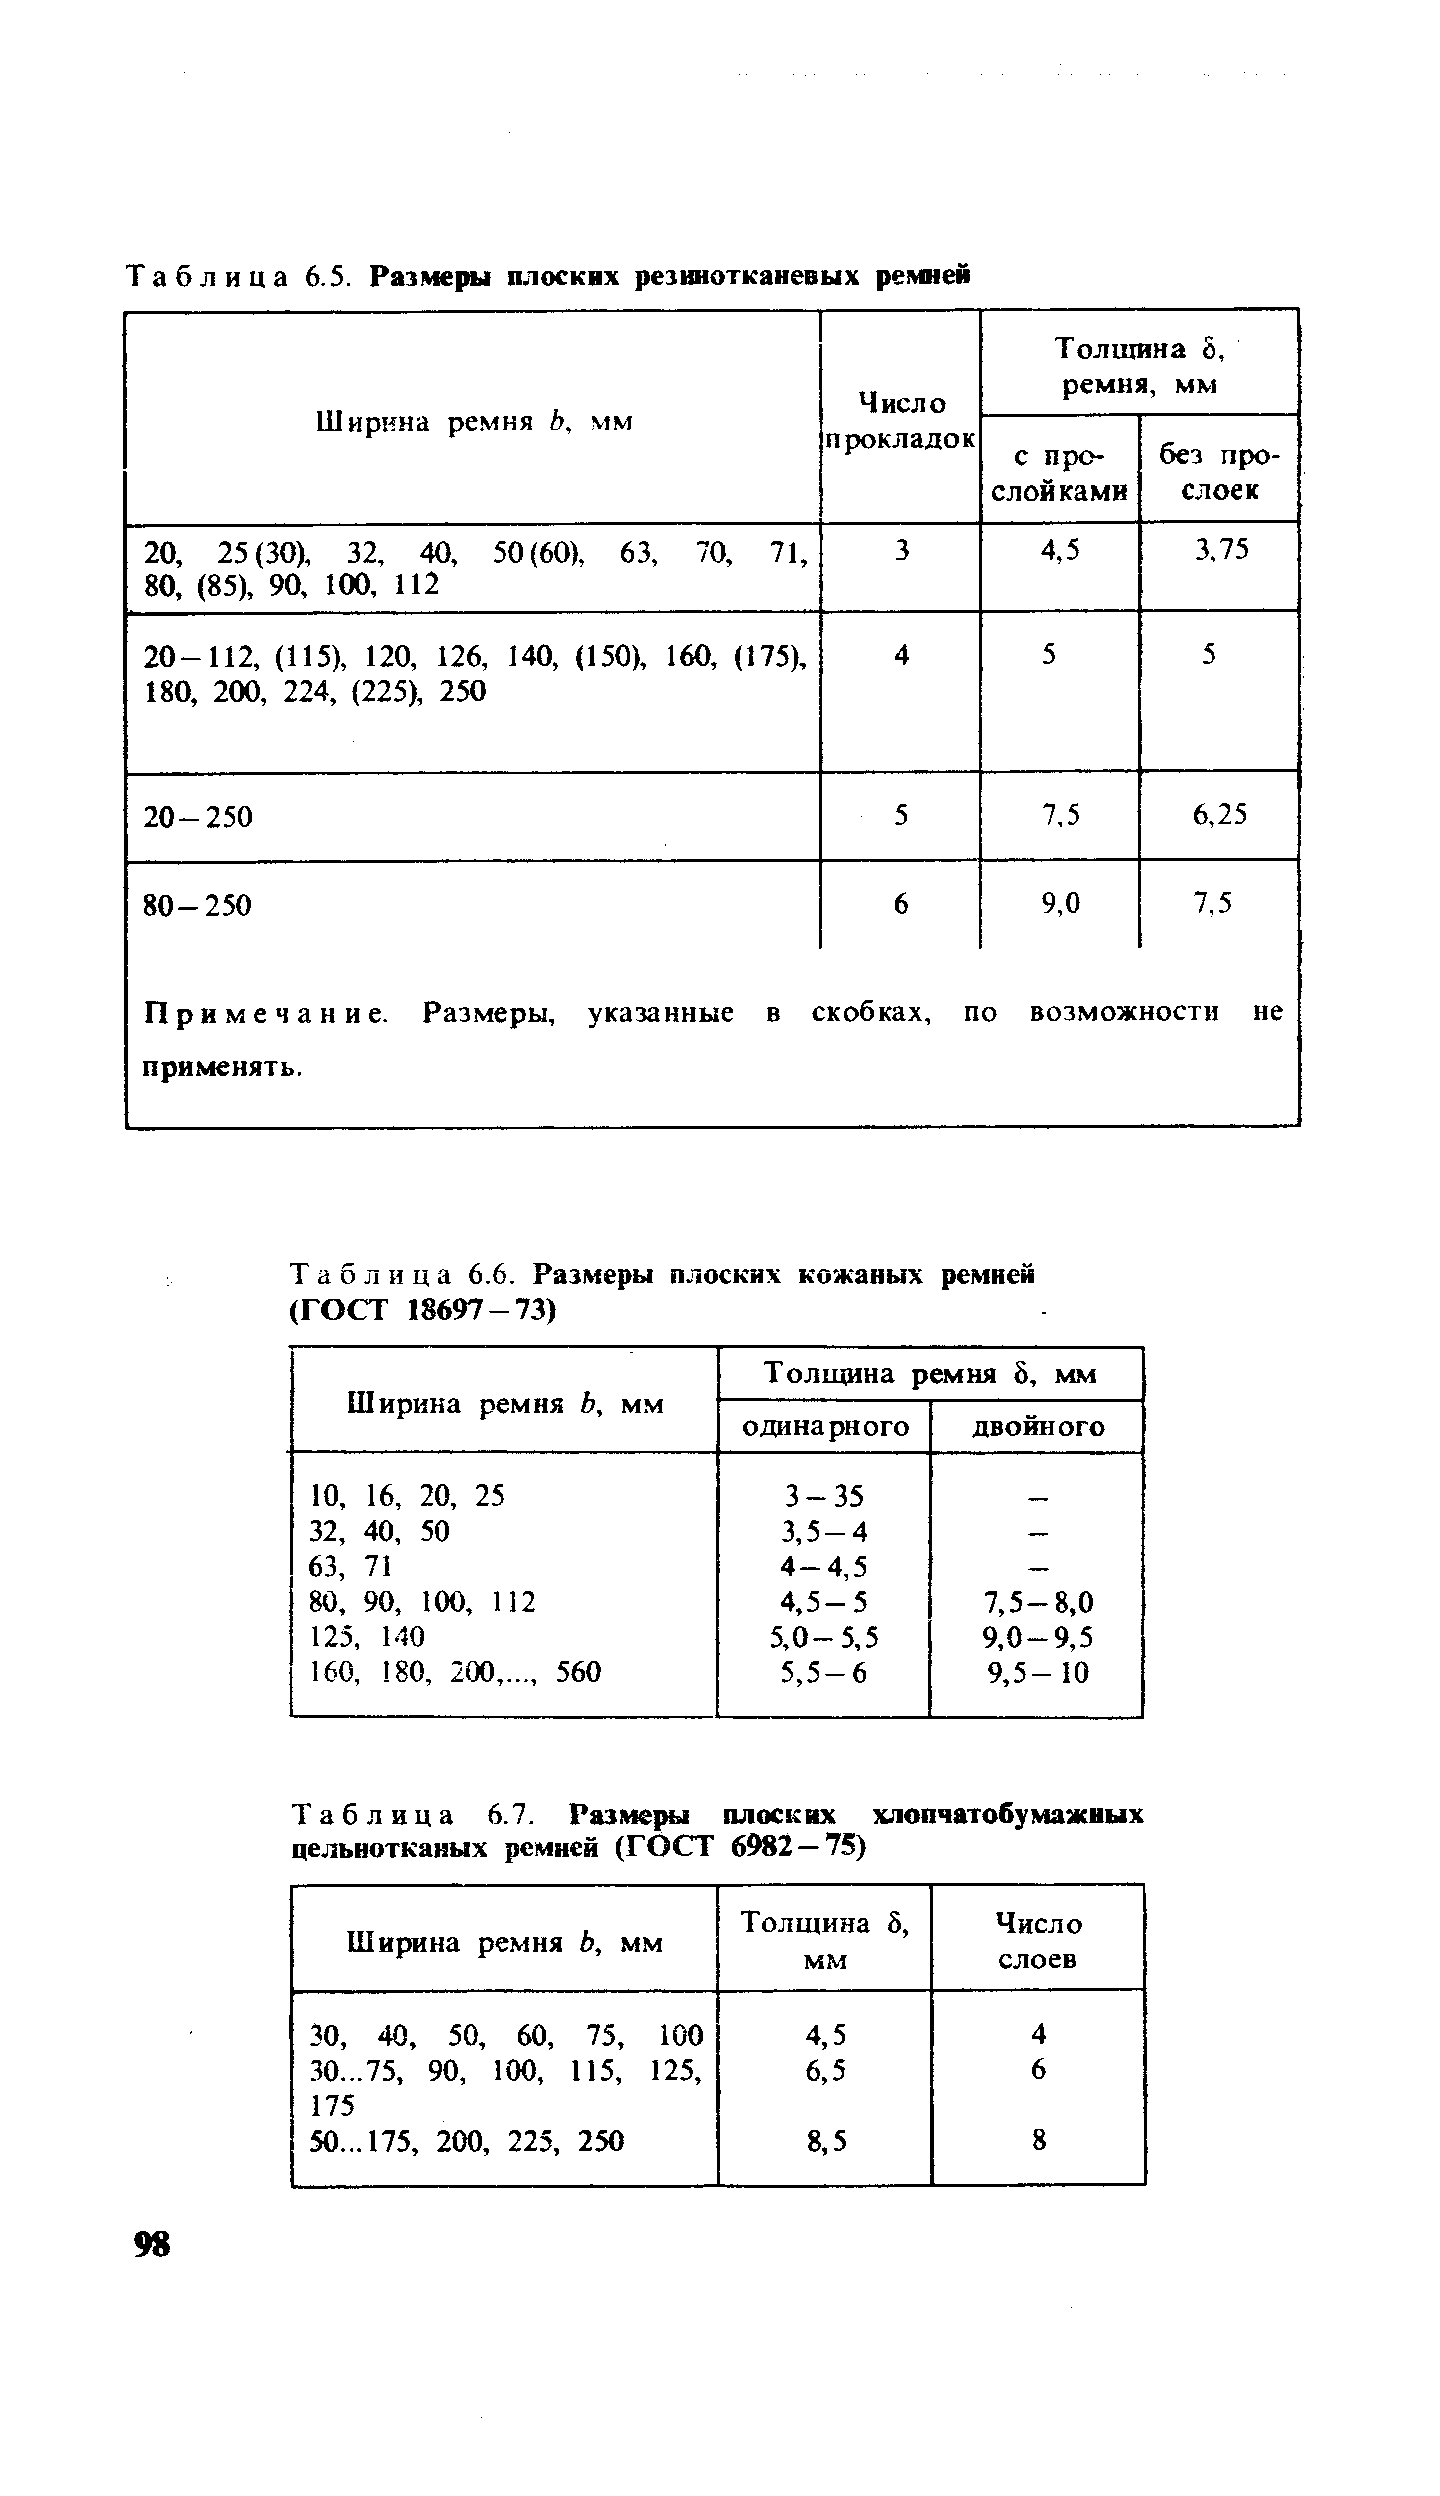 Таблица 6.7. Размеры плоских хлопчатобумажных цельнотканых ремней (ГОСТ 6982 — 75)
